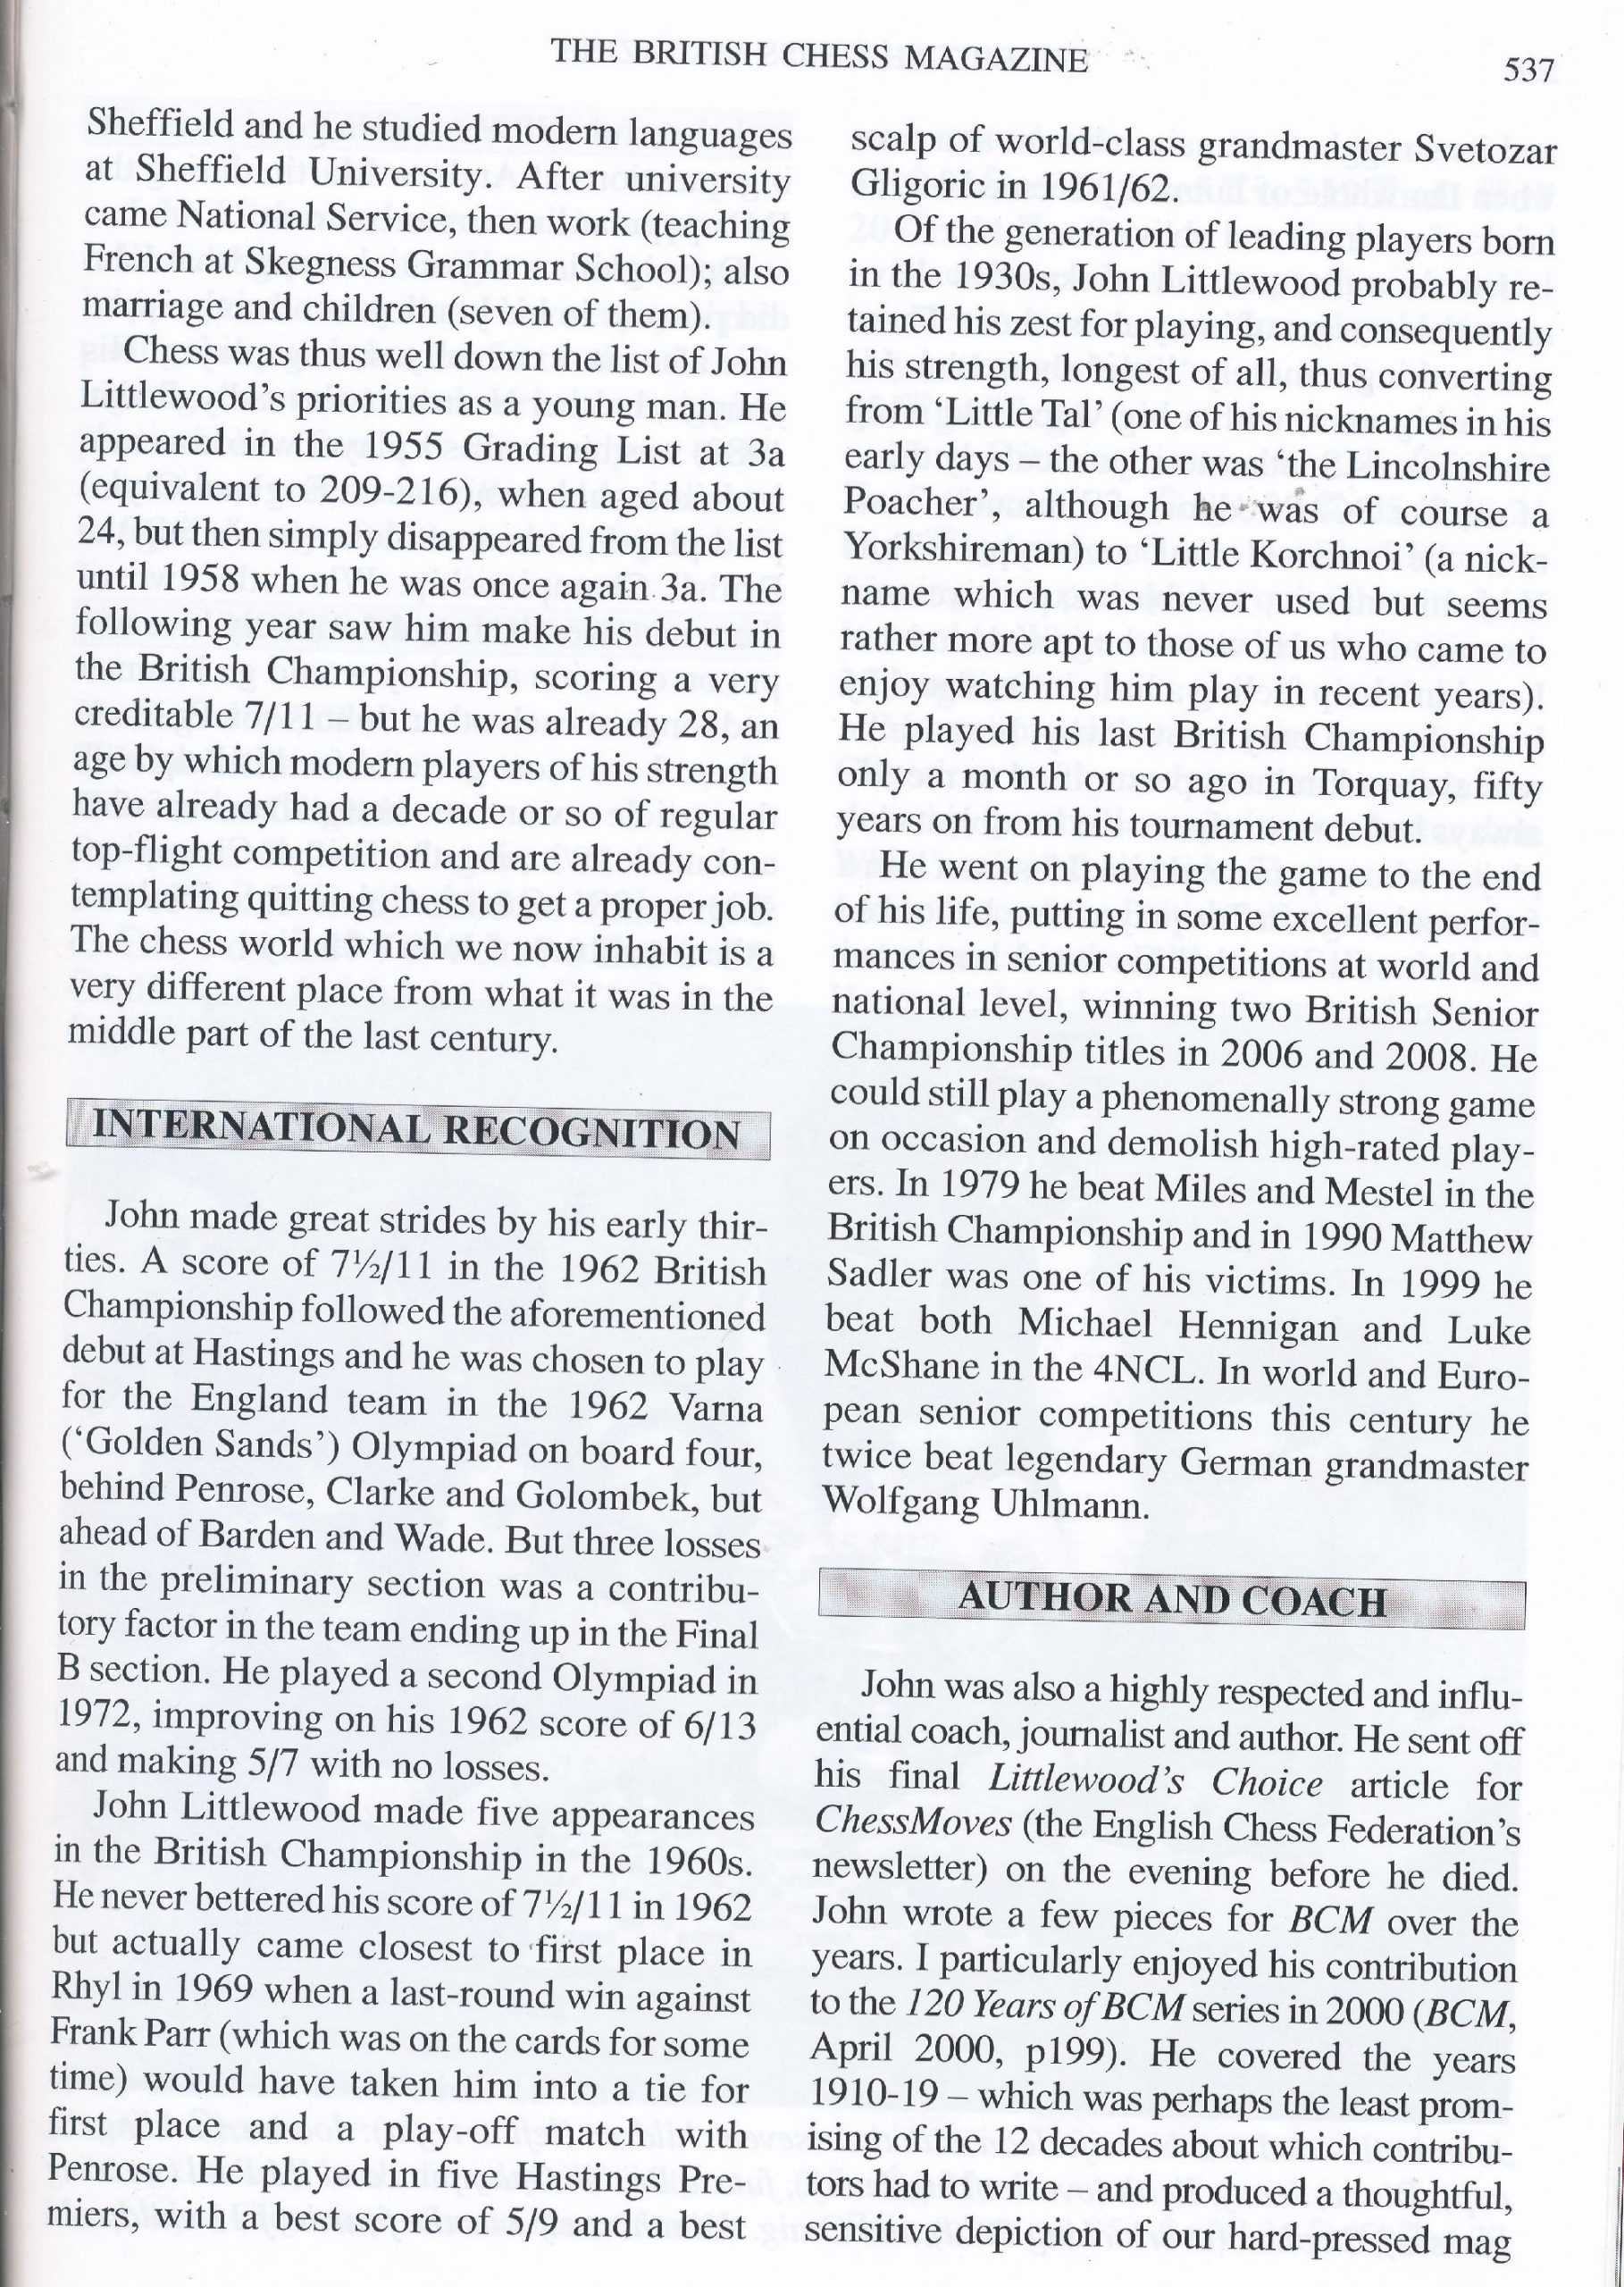 British Chess Magazine, Volume CXXIV (129), 2009, Number 10, October, page 537